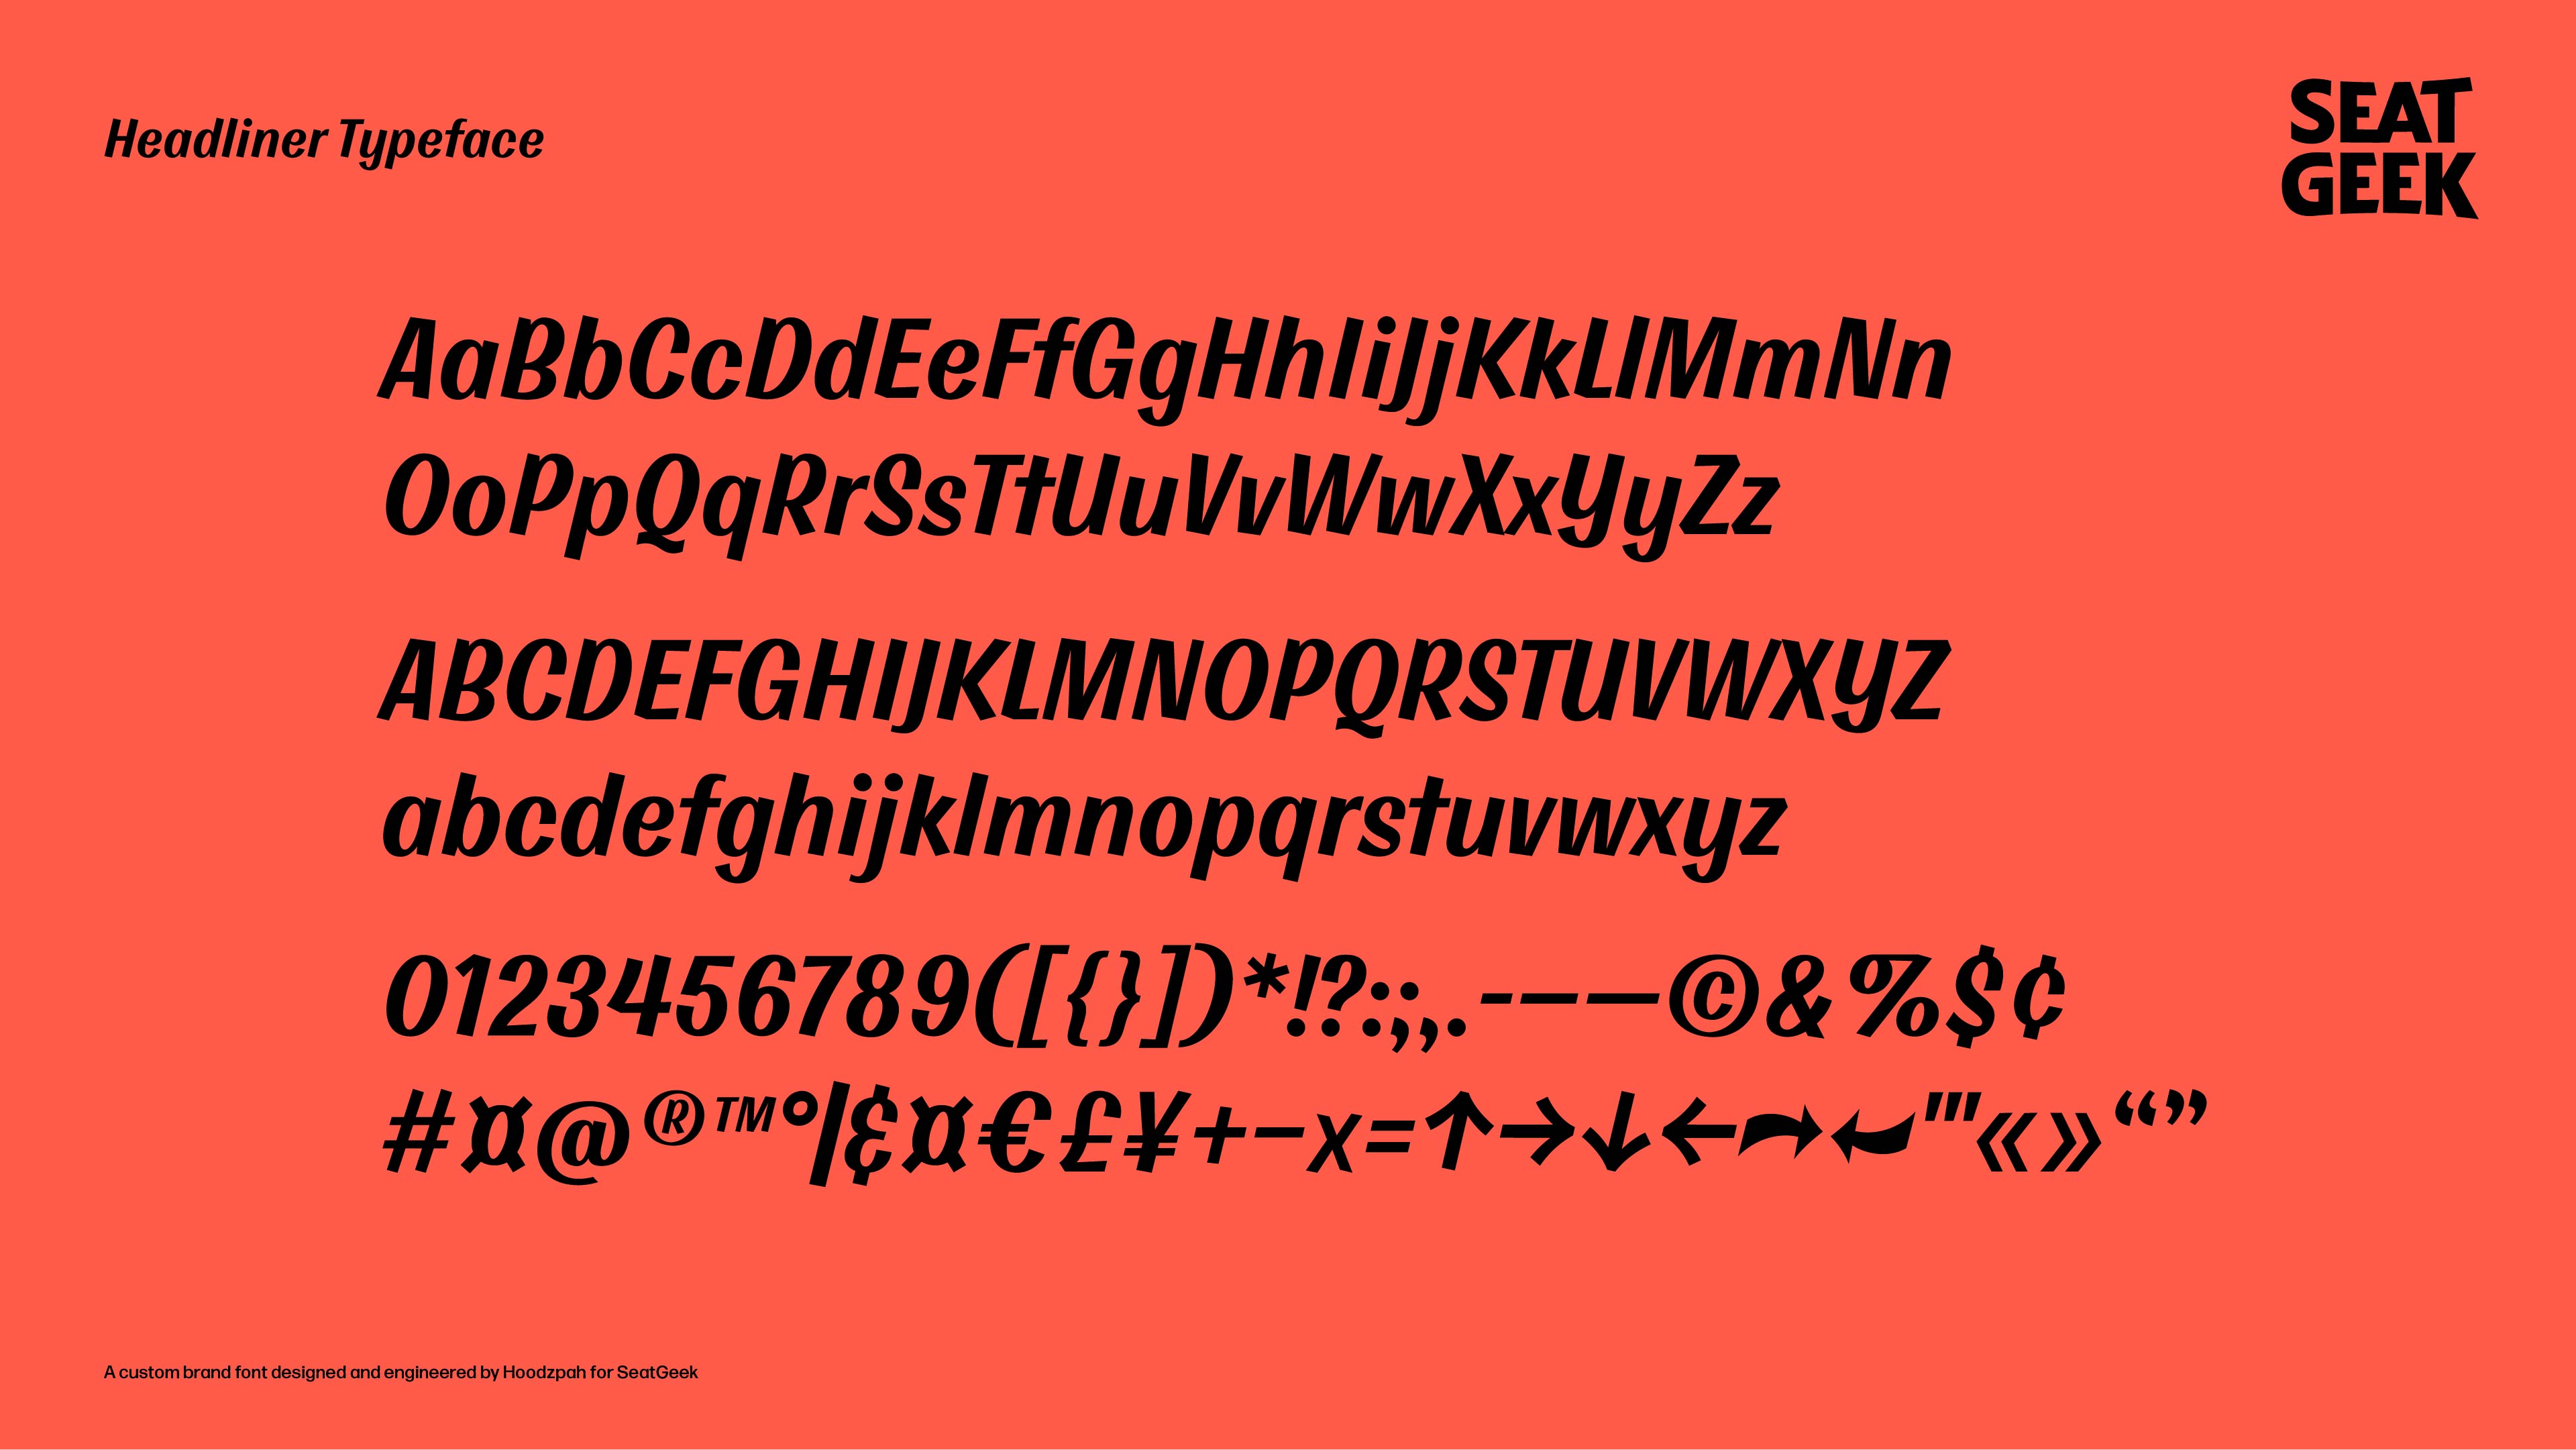 Headliner - a custom brand typeface by Hoodzpah for SeatGeek